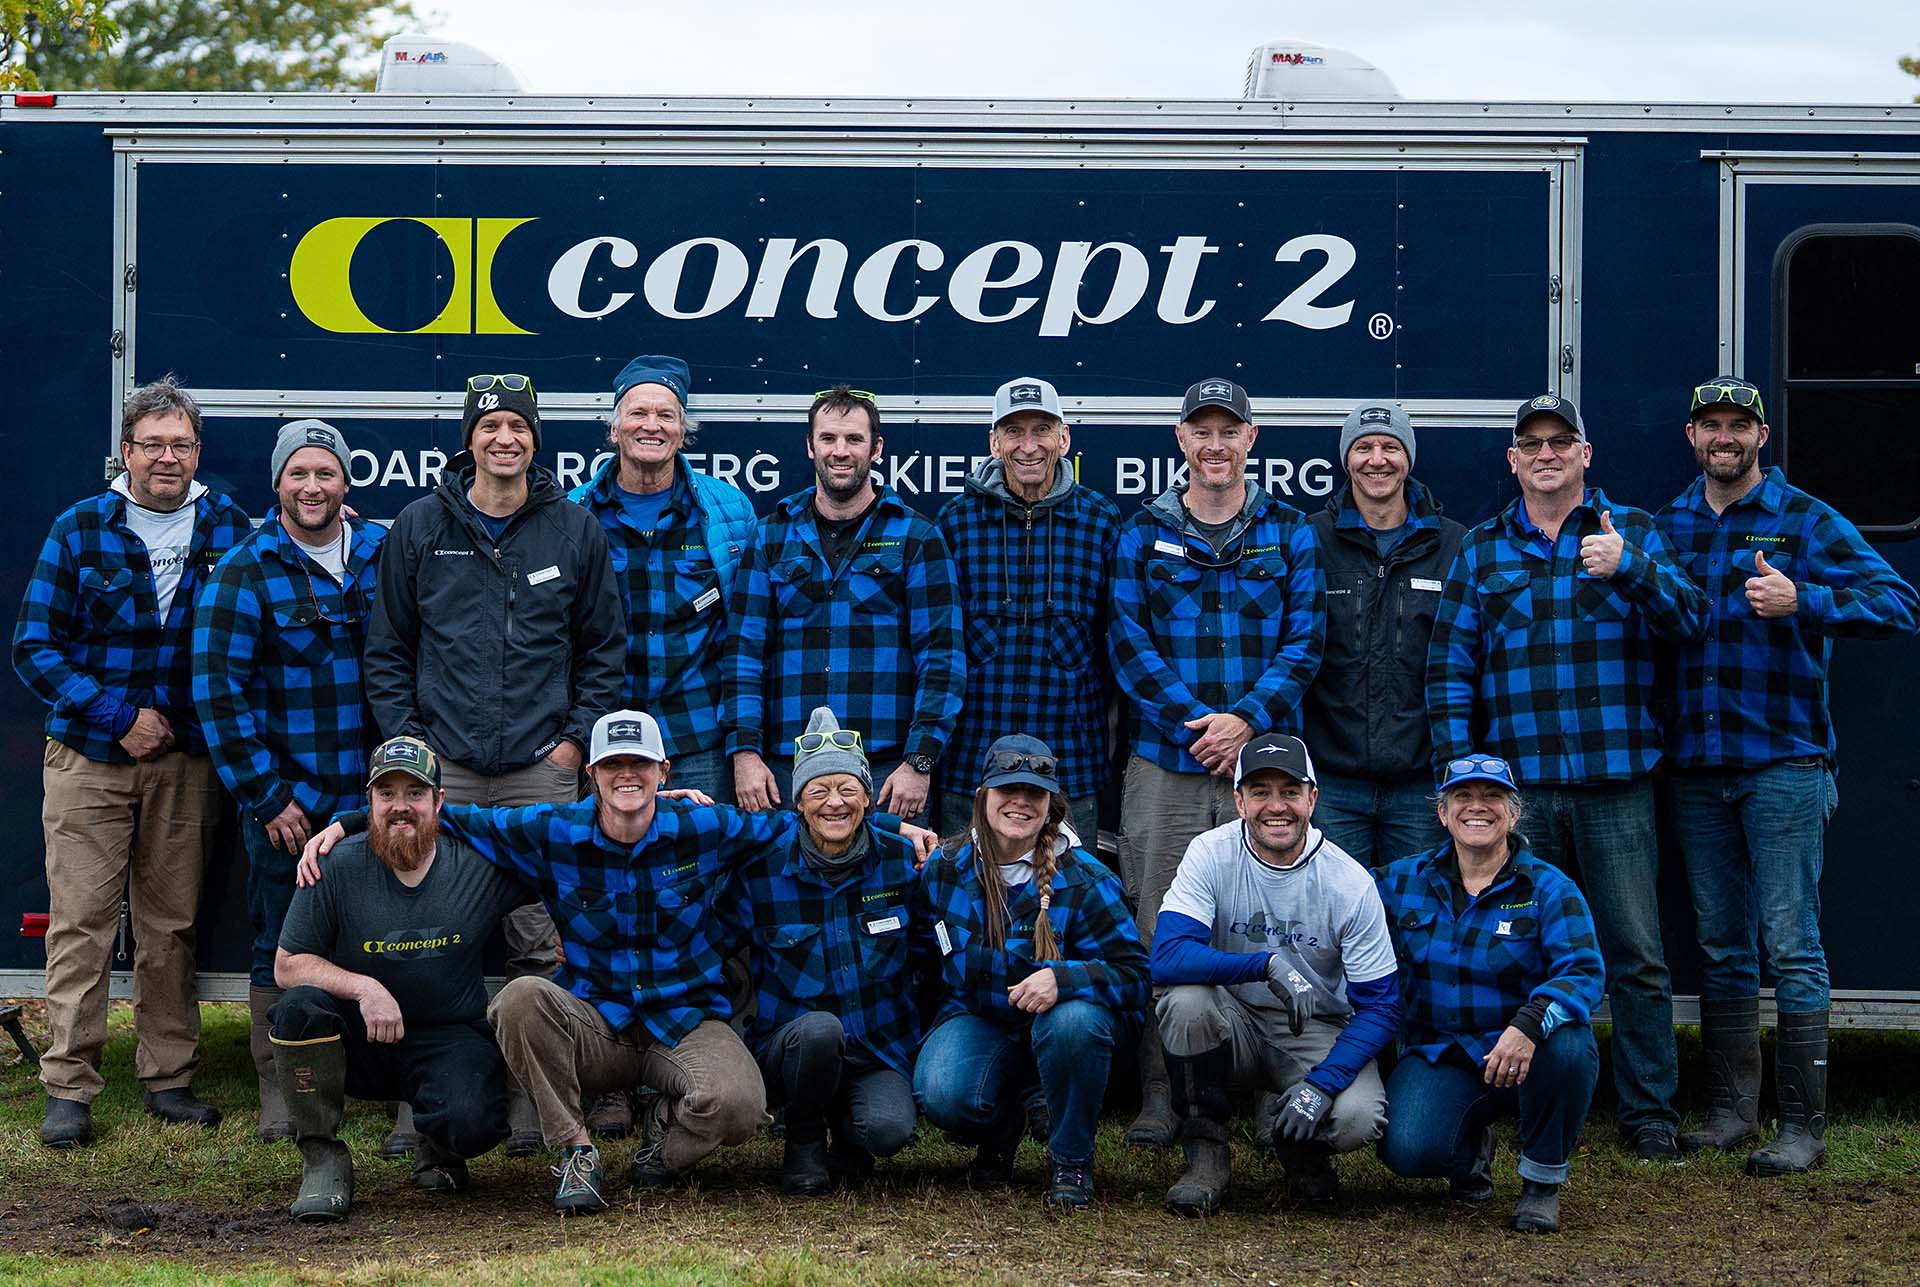 The Concept2 Regatta team in front of the oar trailer